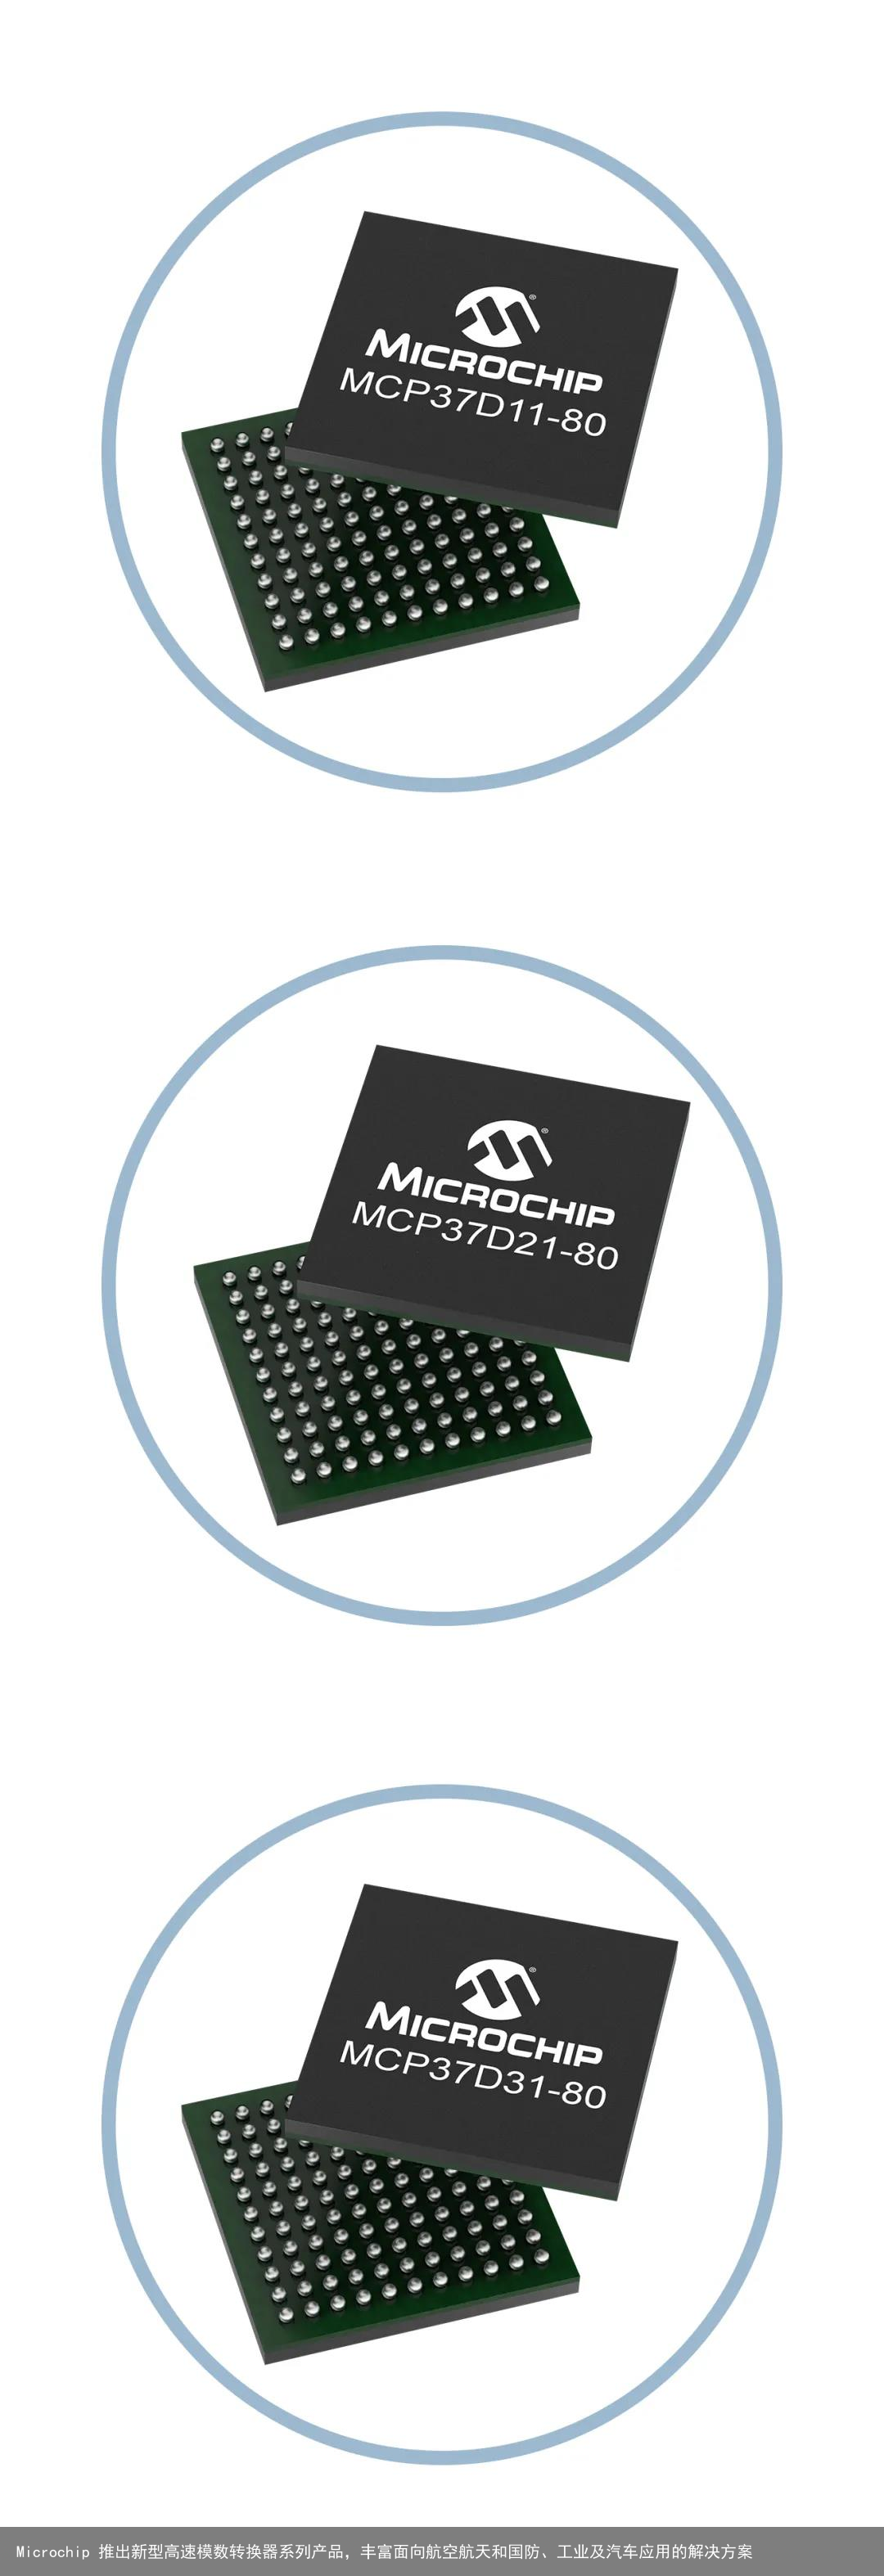 Microchip 推出新型高速模数转换器系列产品，丰富面向航空航天和国防、工业及汽车应用的解决方案1